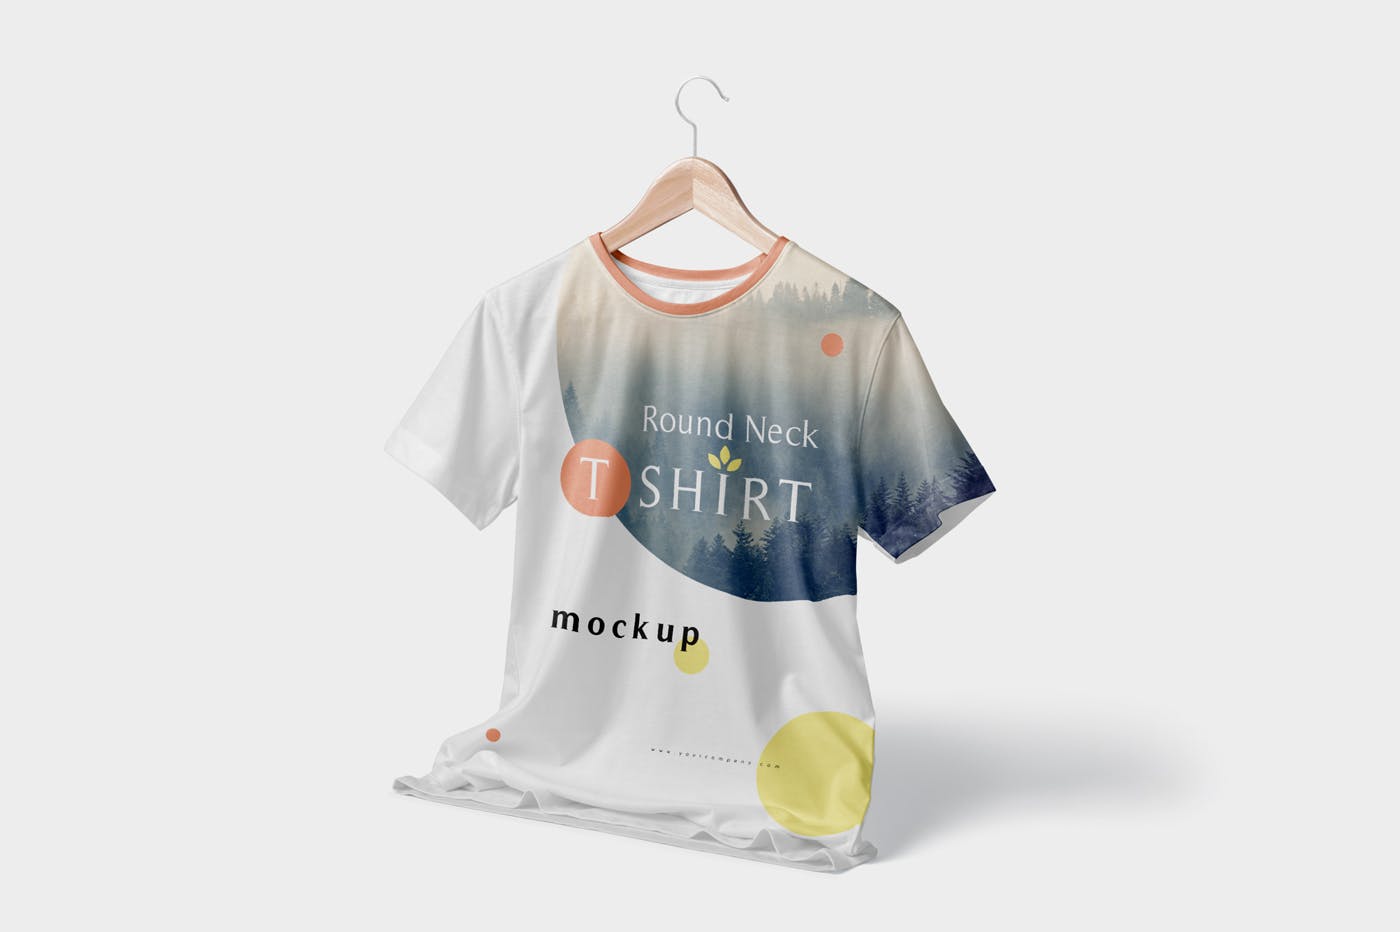 时尚圆领T恤印花设计效果图样机模板 Modish Round Neck T-Shirts Mockups插图(2)